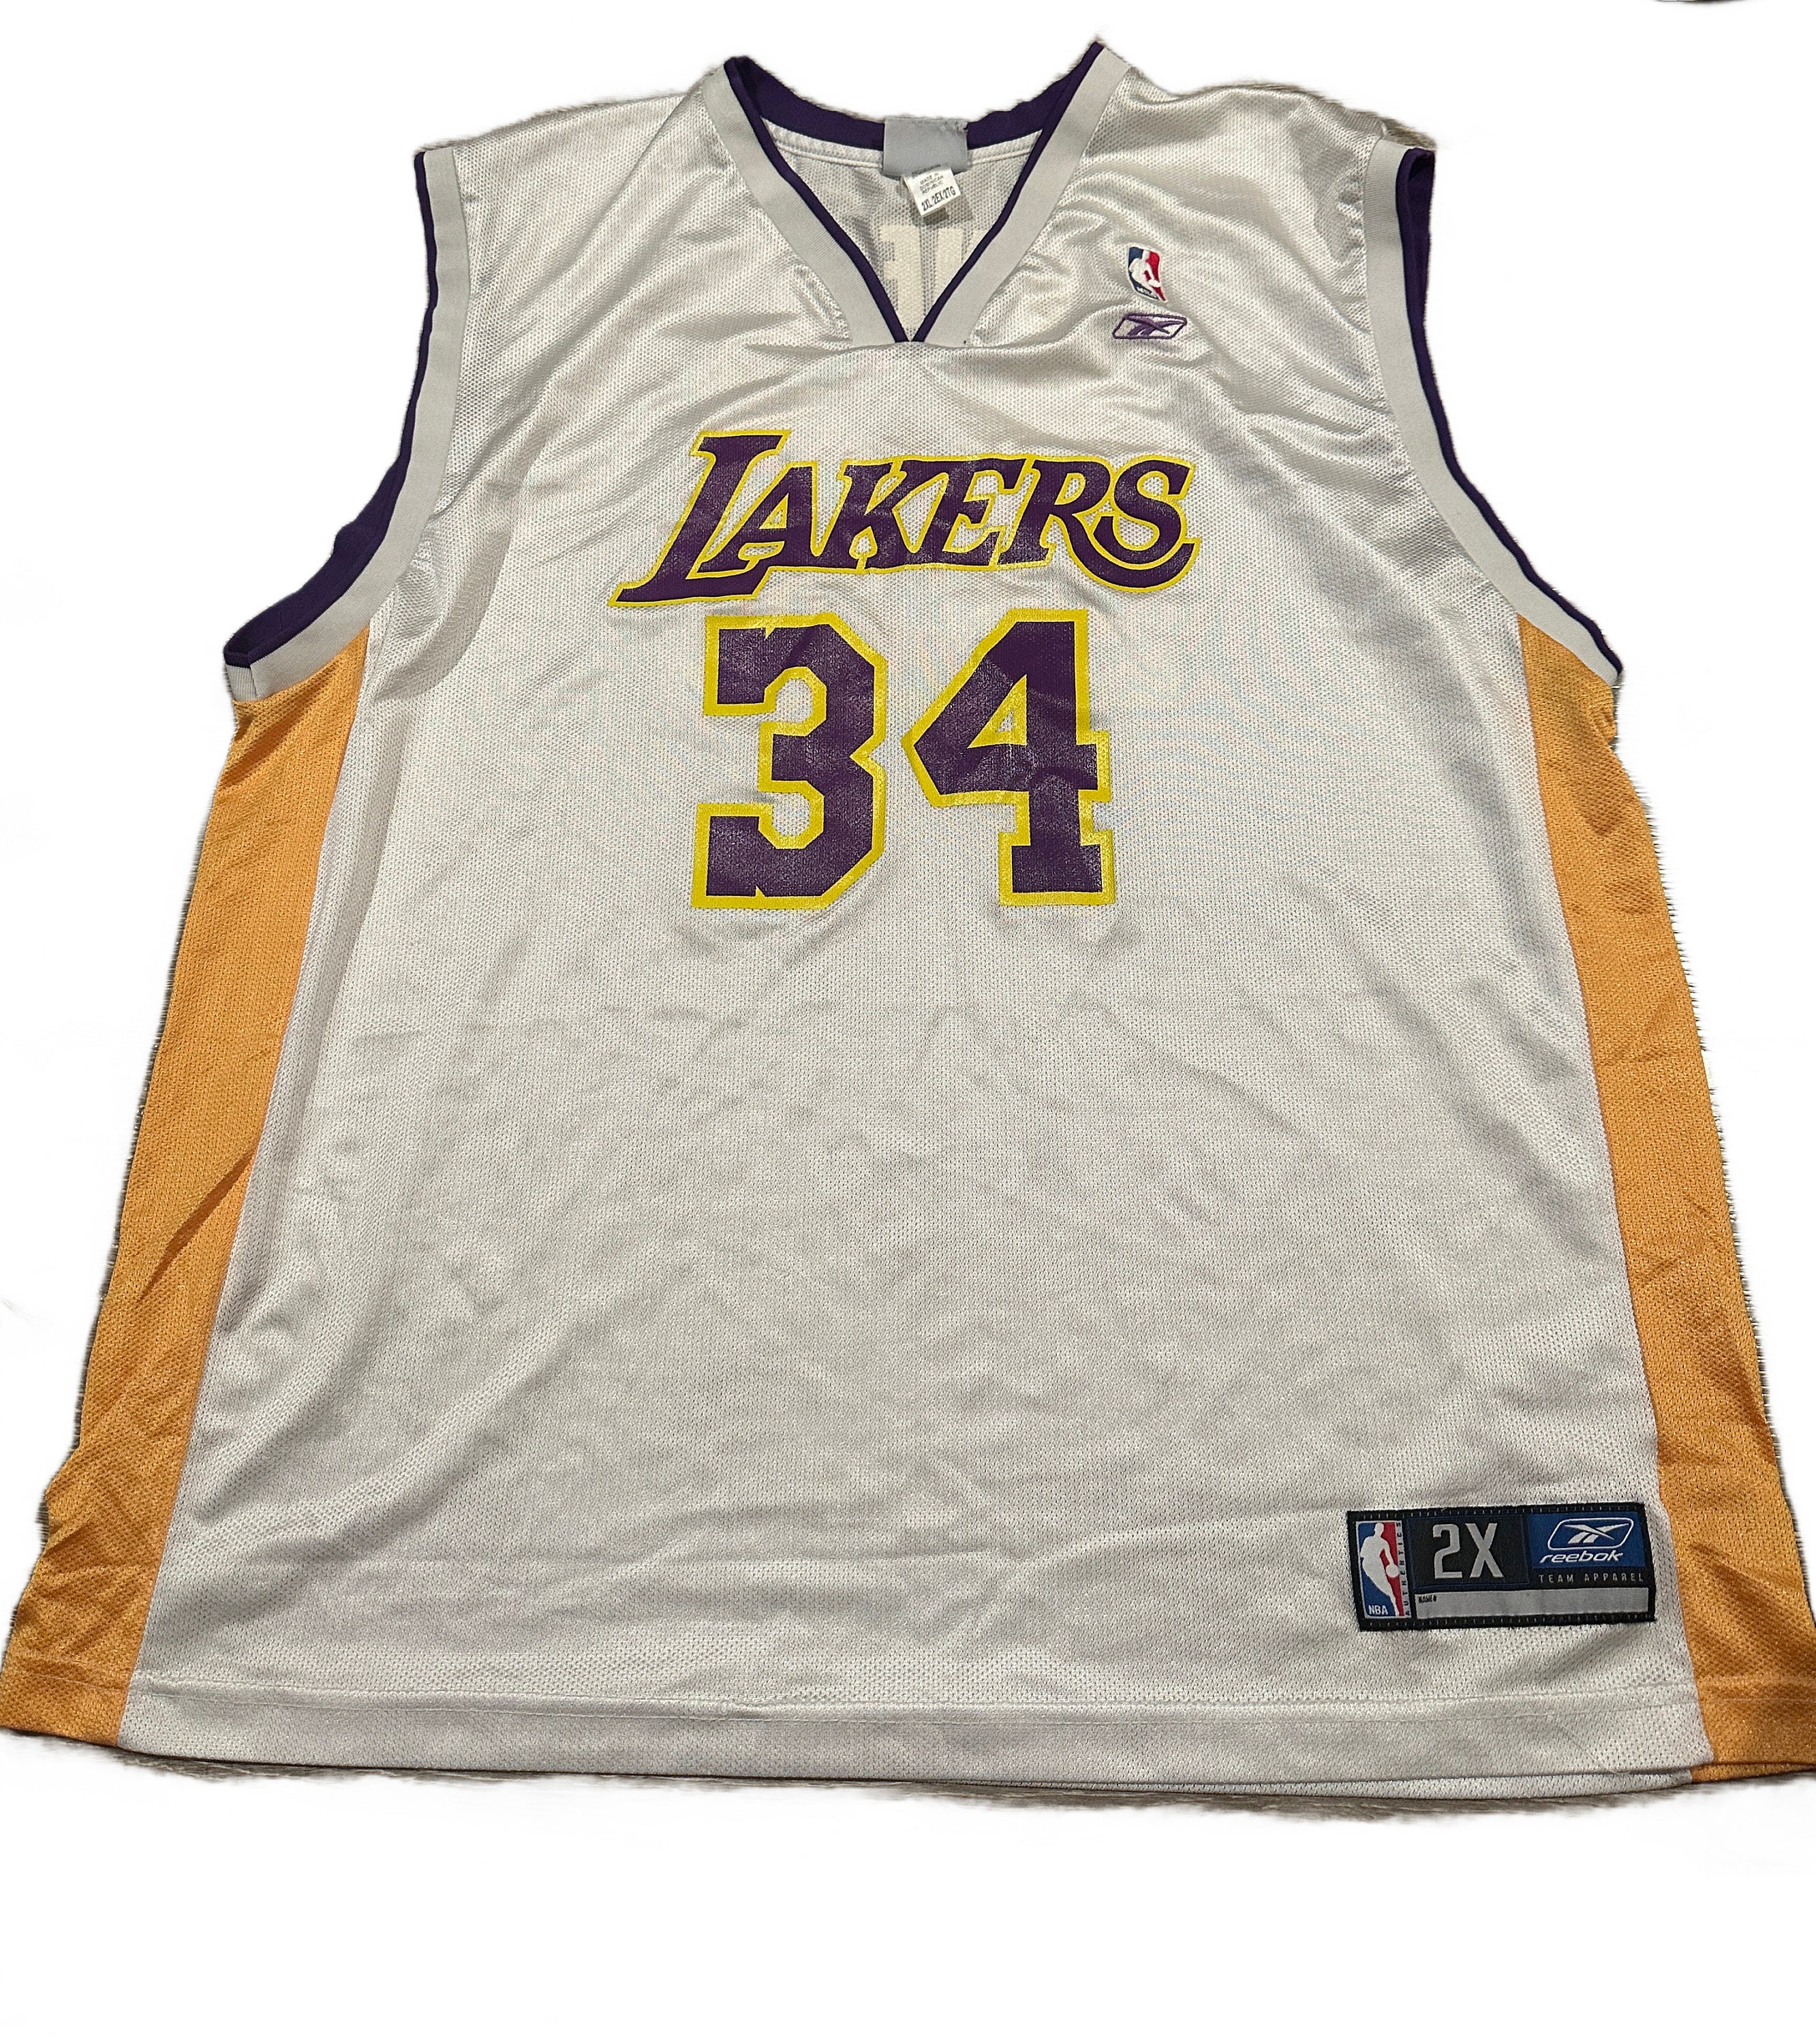 Reebok Basketball Jersey, Los Angeles Lakers, #34 Shaq Oneal, Nba